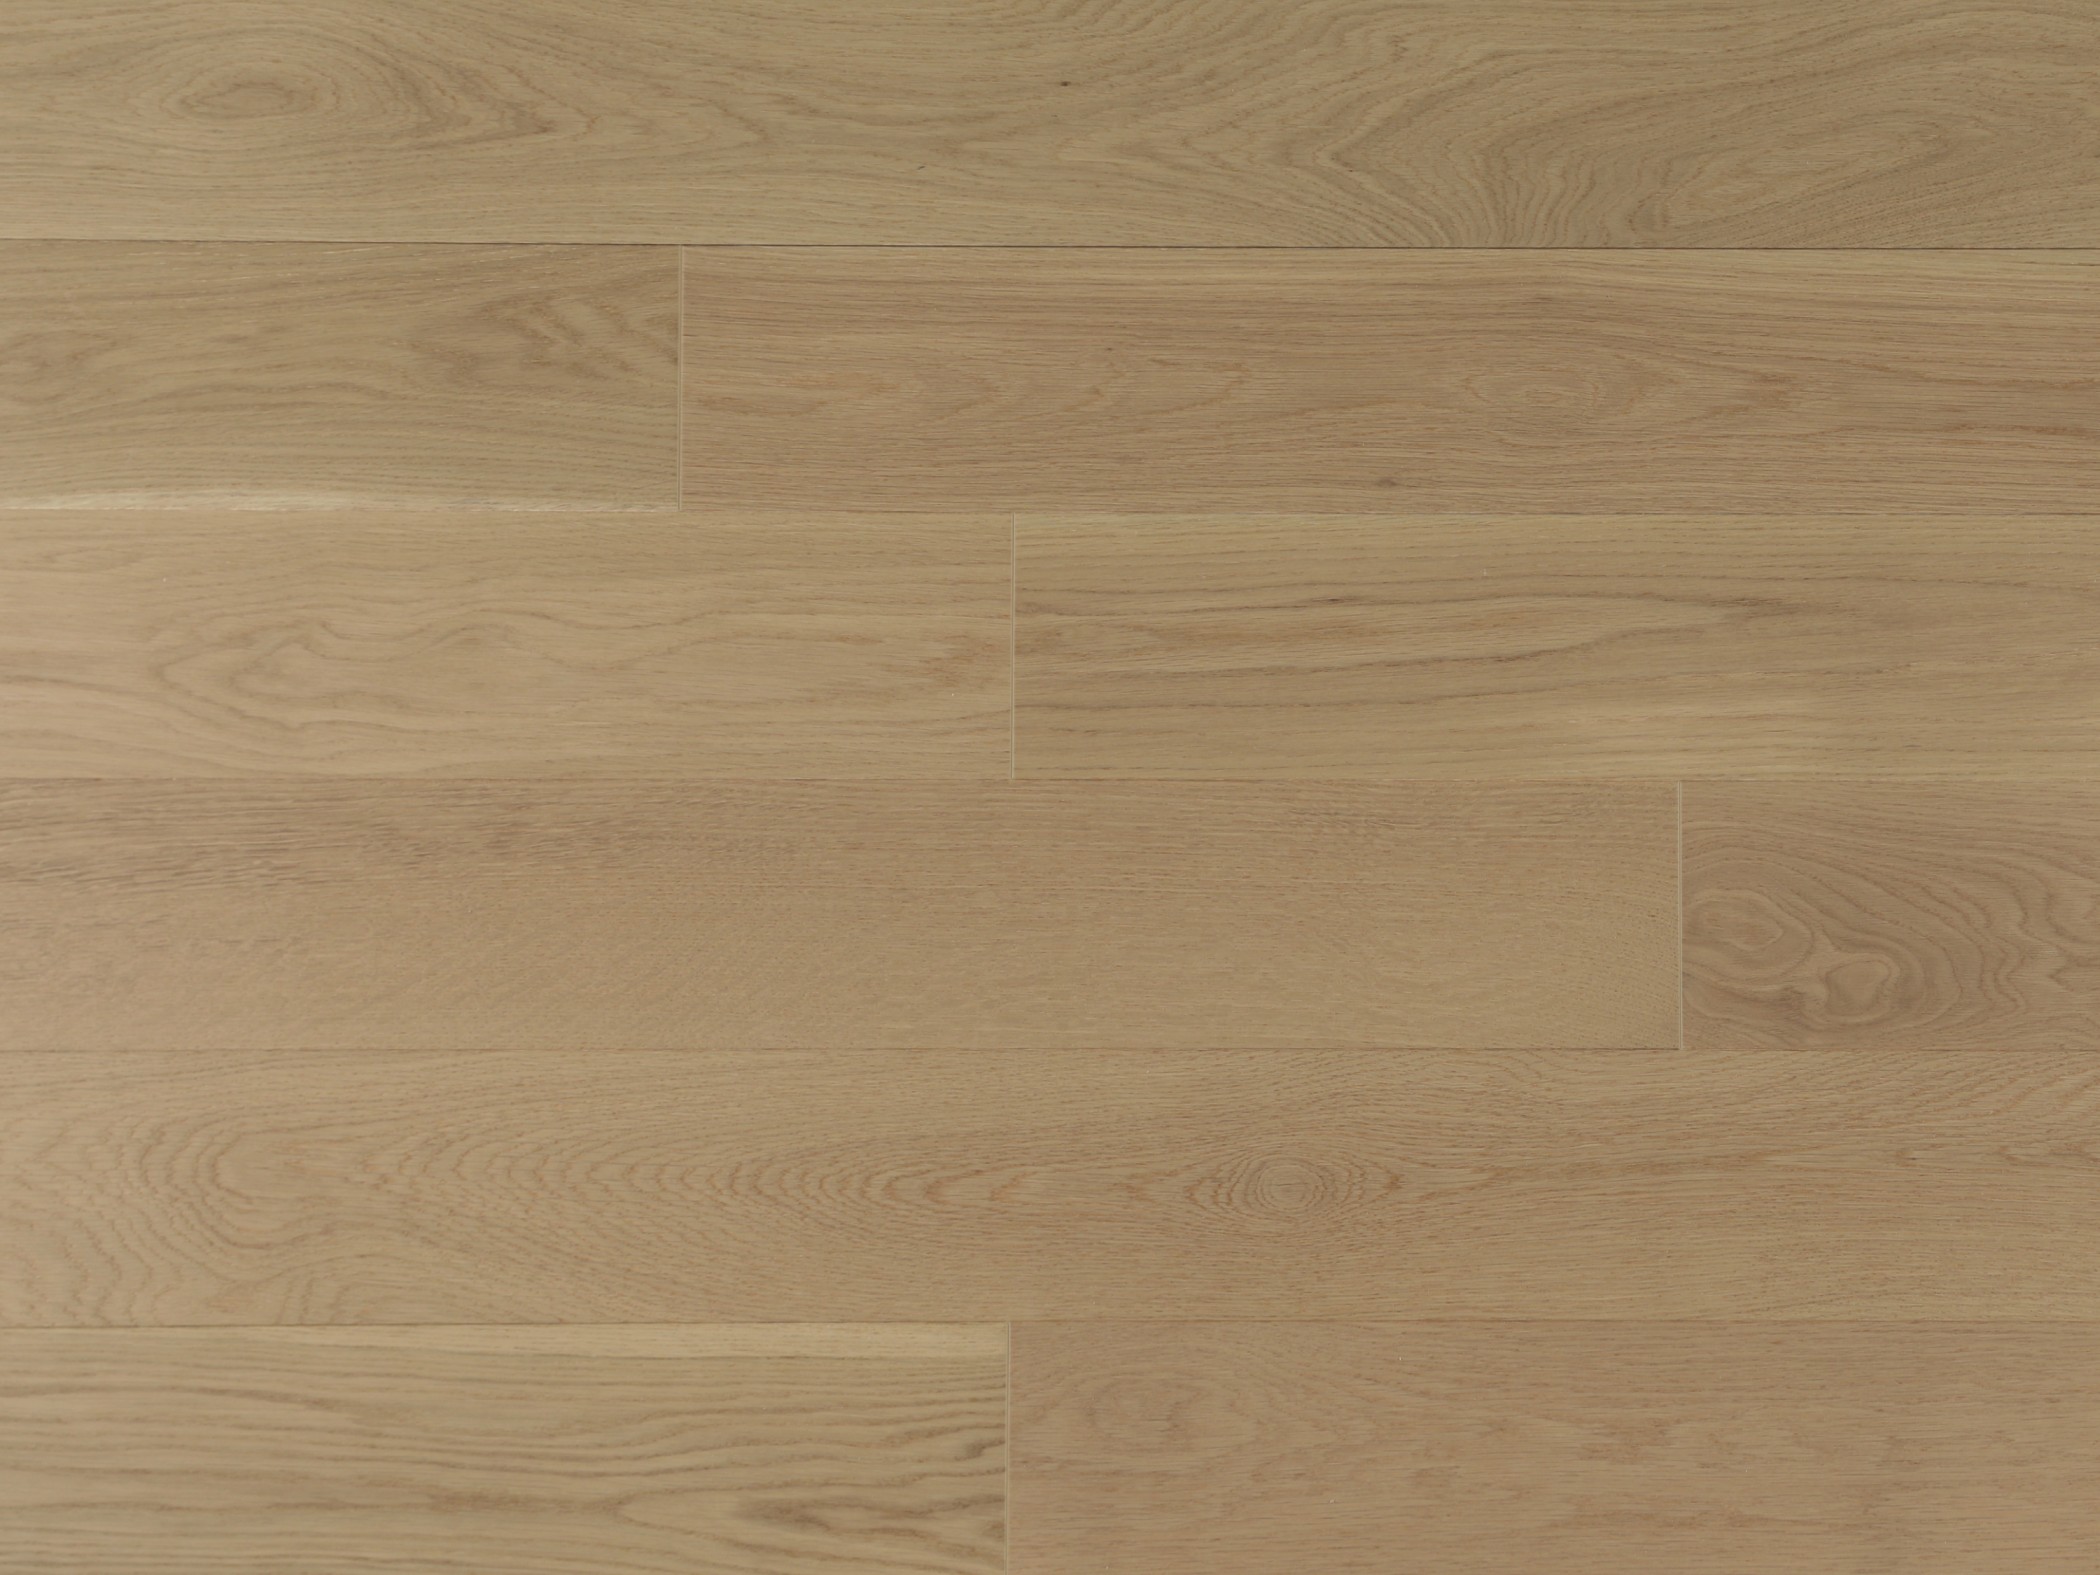 Day Break American White Oak Vidar Design Engineered Hardwood Flooring